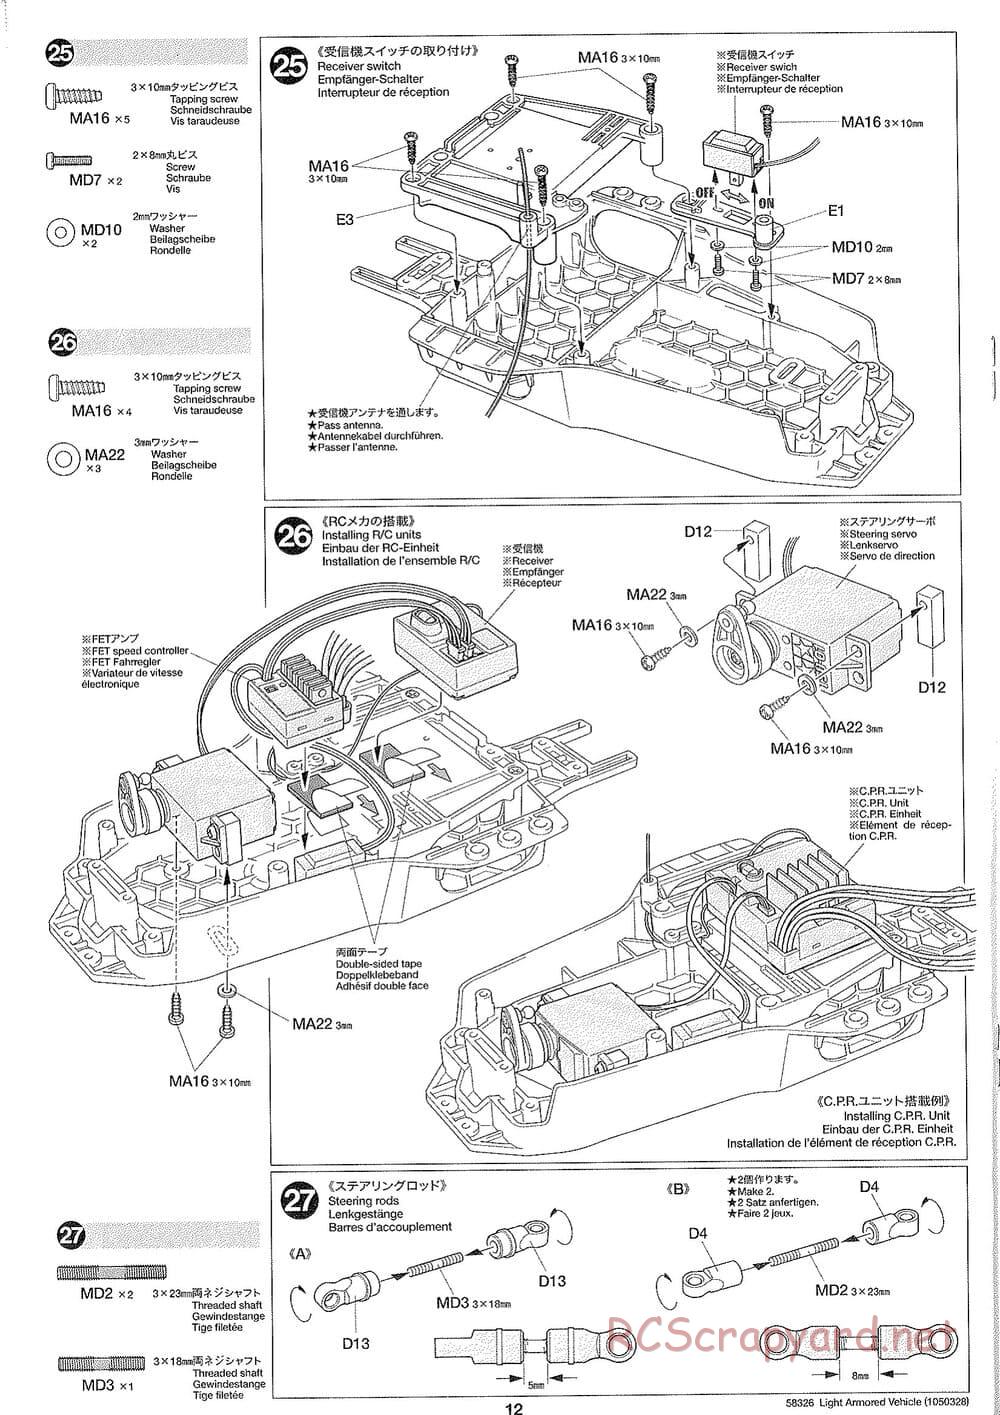 Tamiya - JGSDF Light Armored Vehicle - TA-01 Chassis - Manual - Page 12